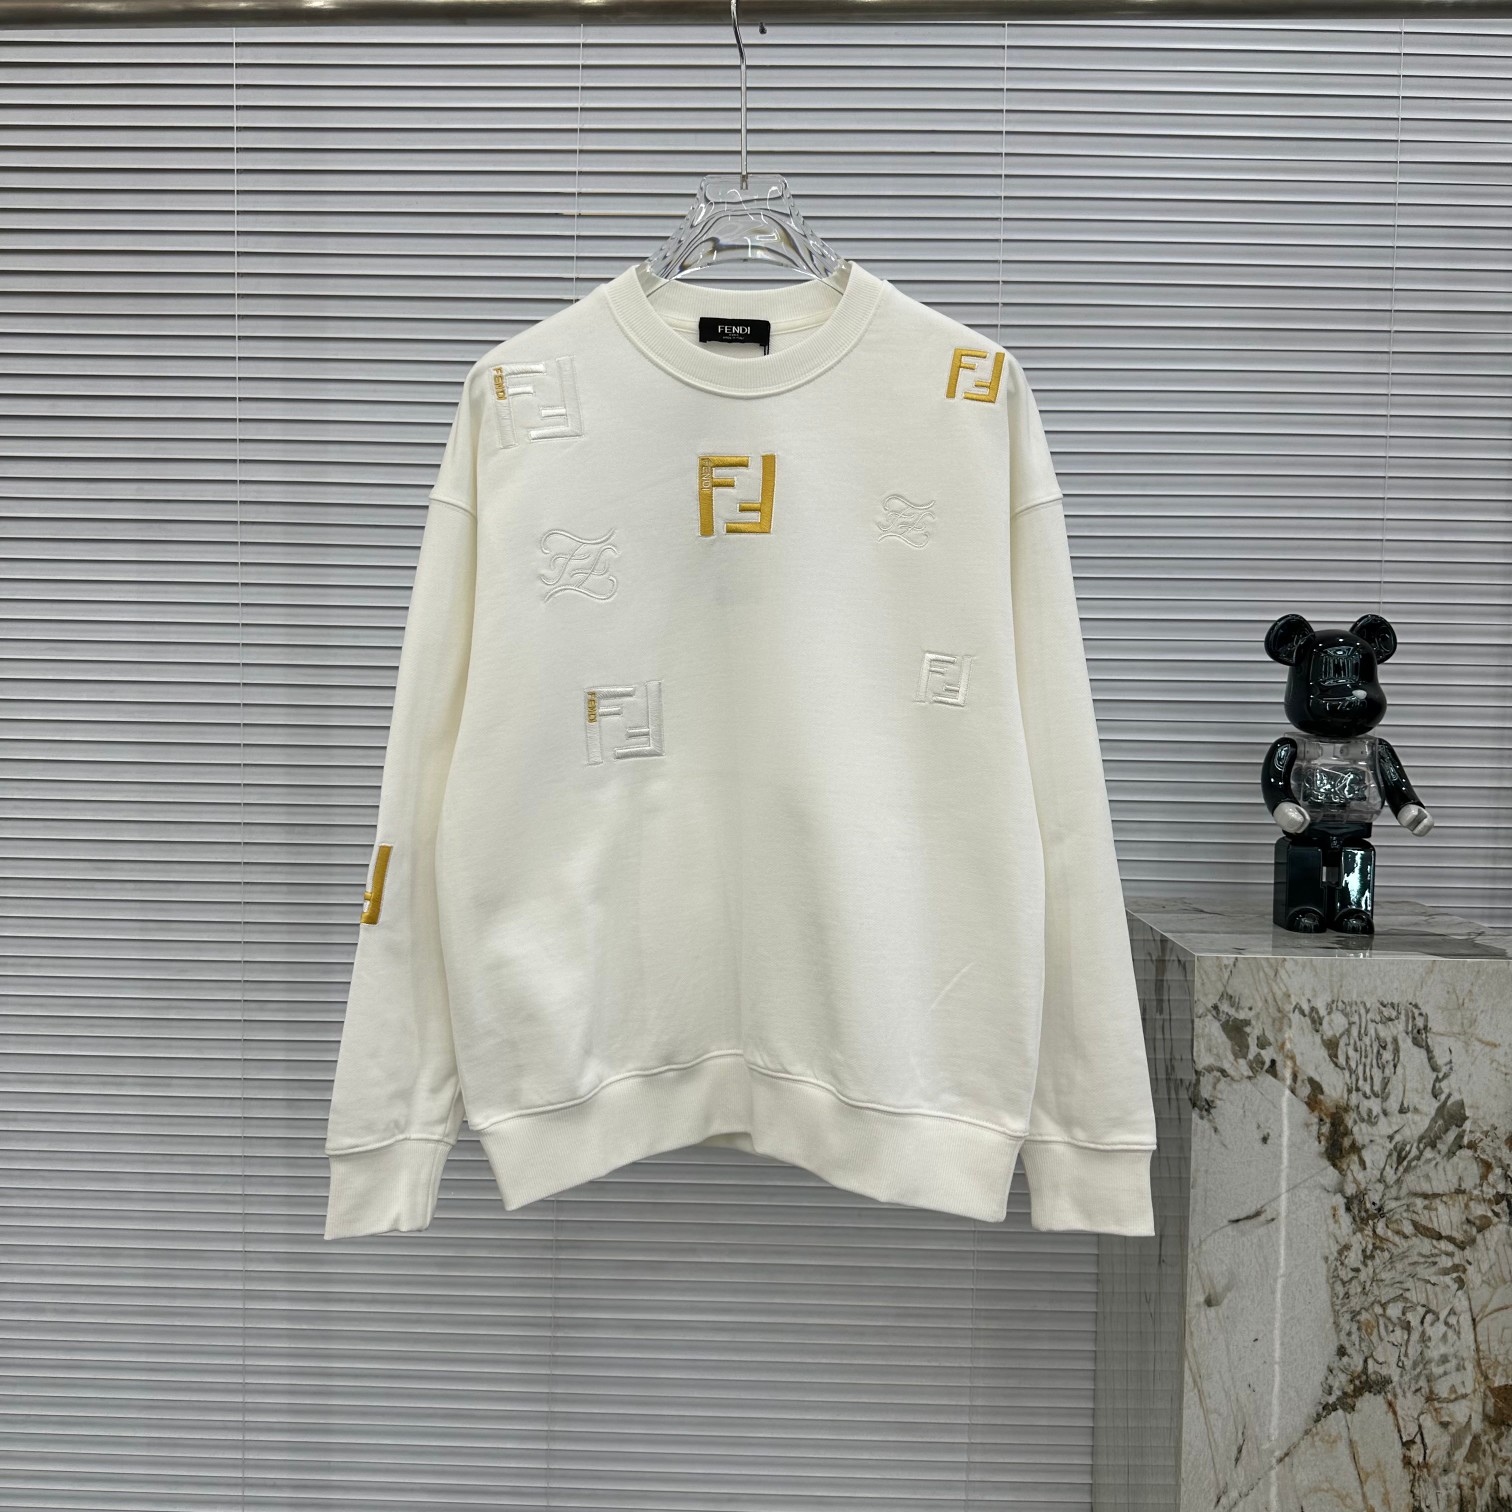 Fendi Clothing Sweatshirts Best Capucines Replica
 Black White Unisex Cotton Fall/Winter Collection